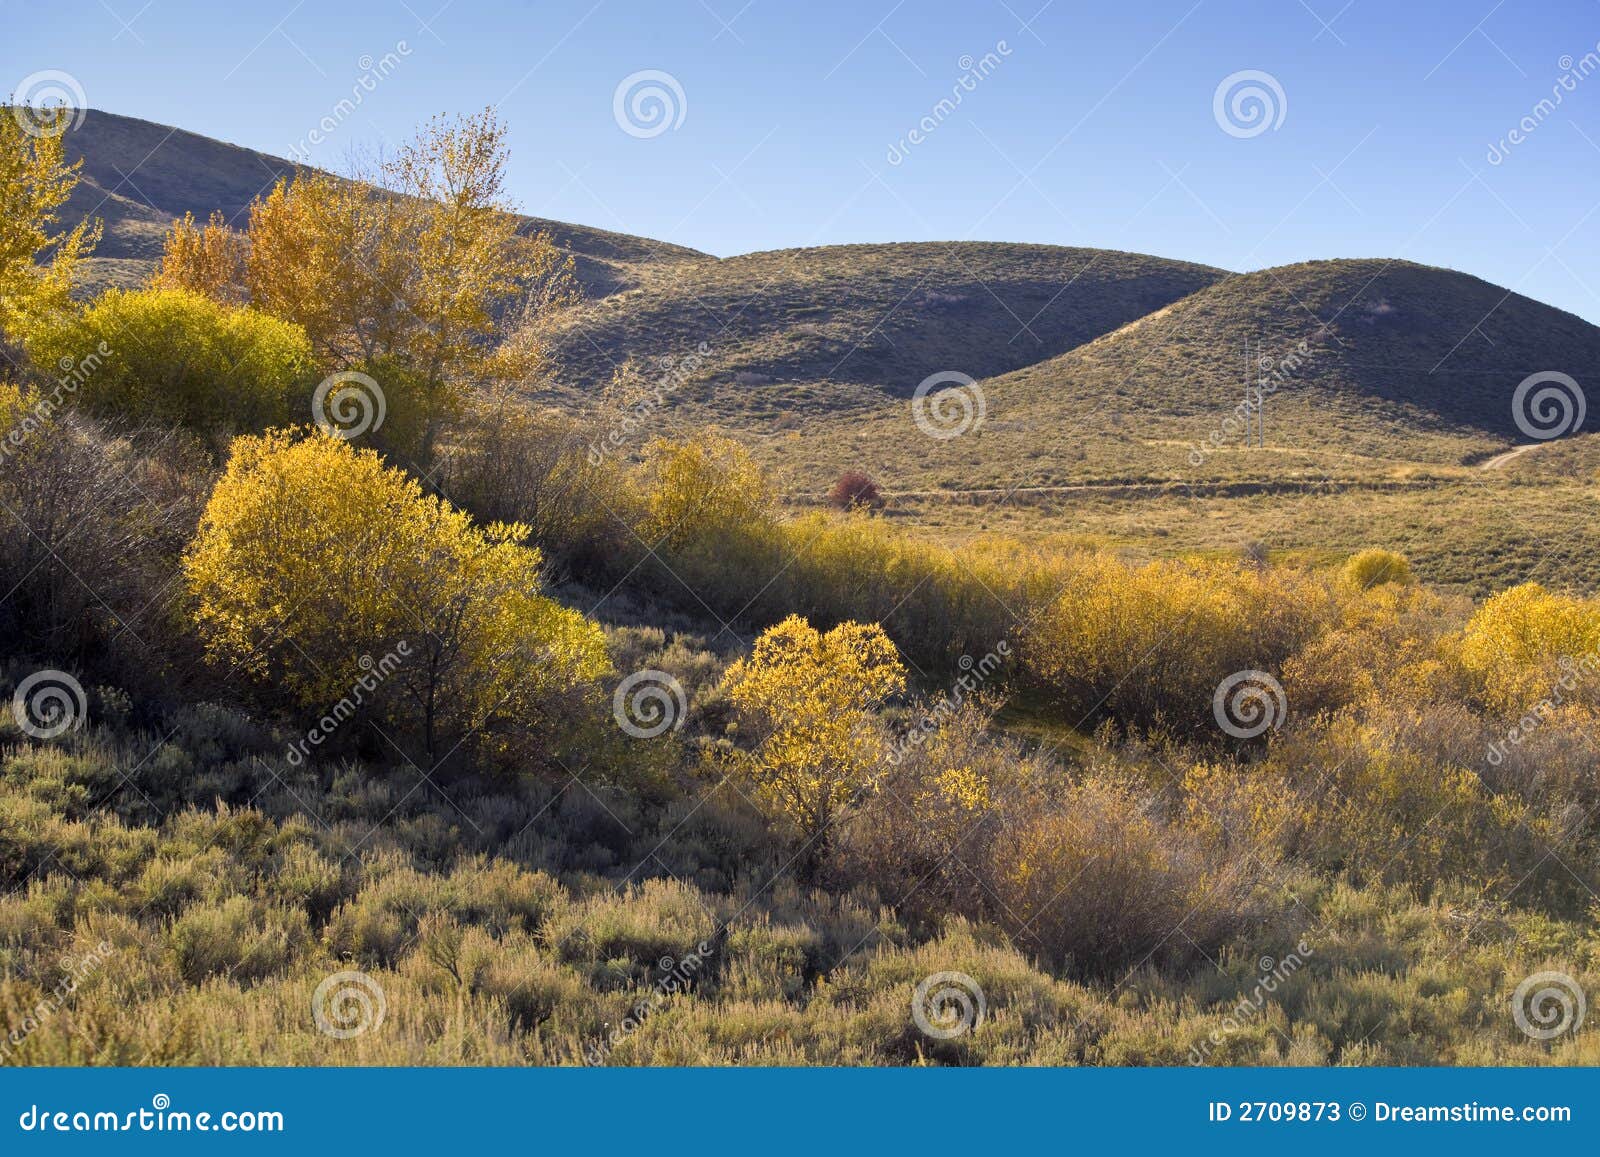 Idaho scenic vegetation